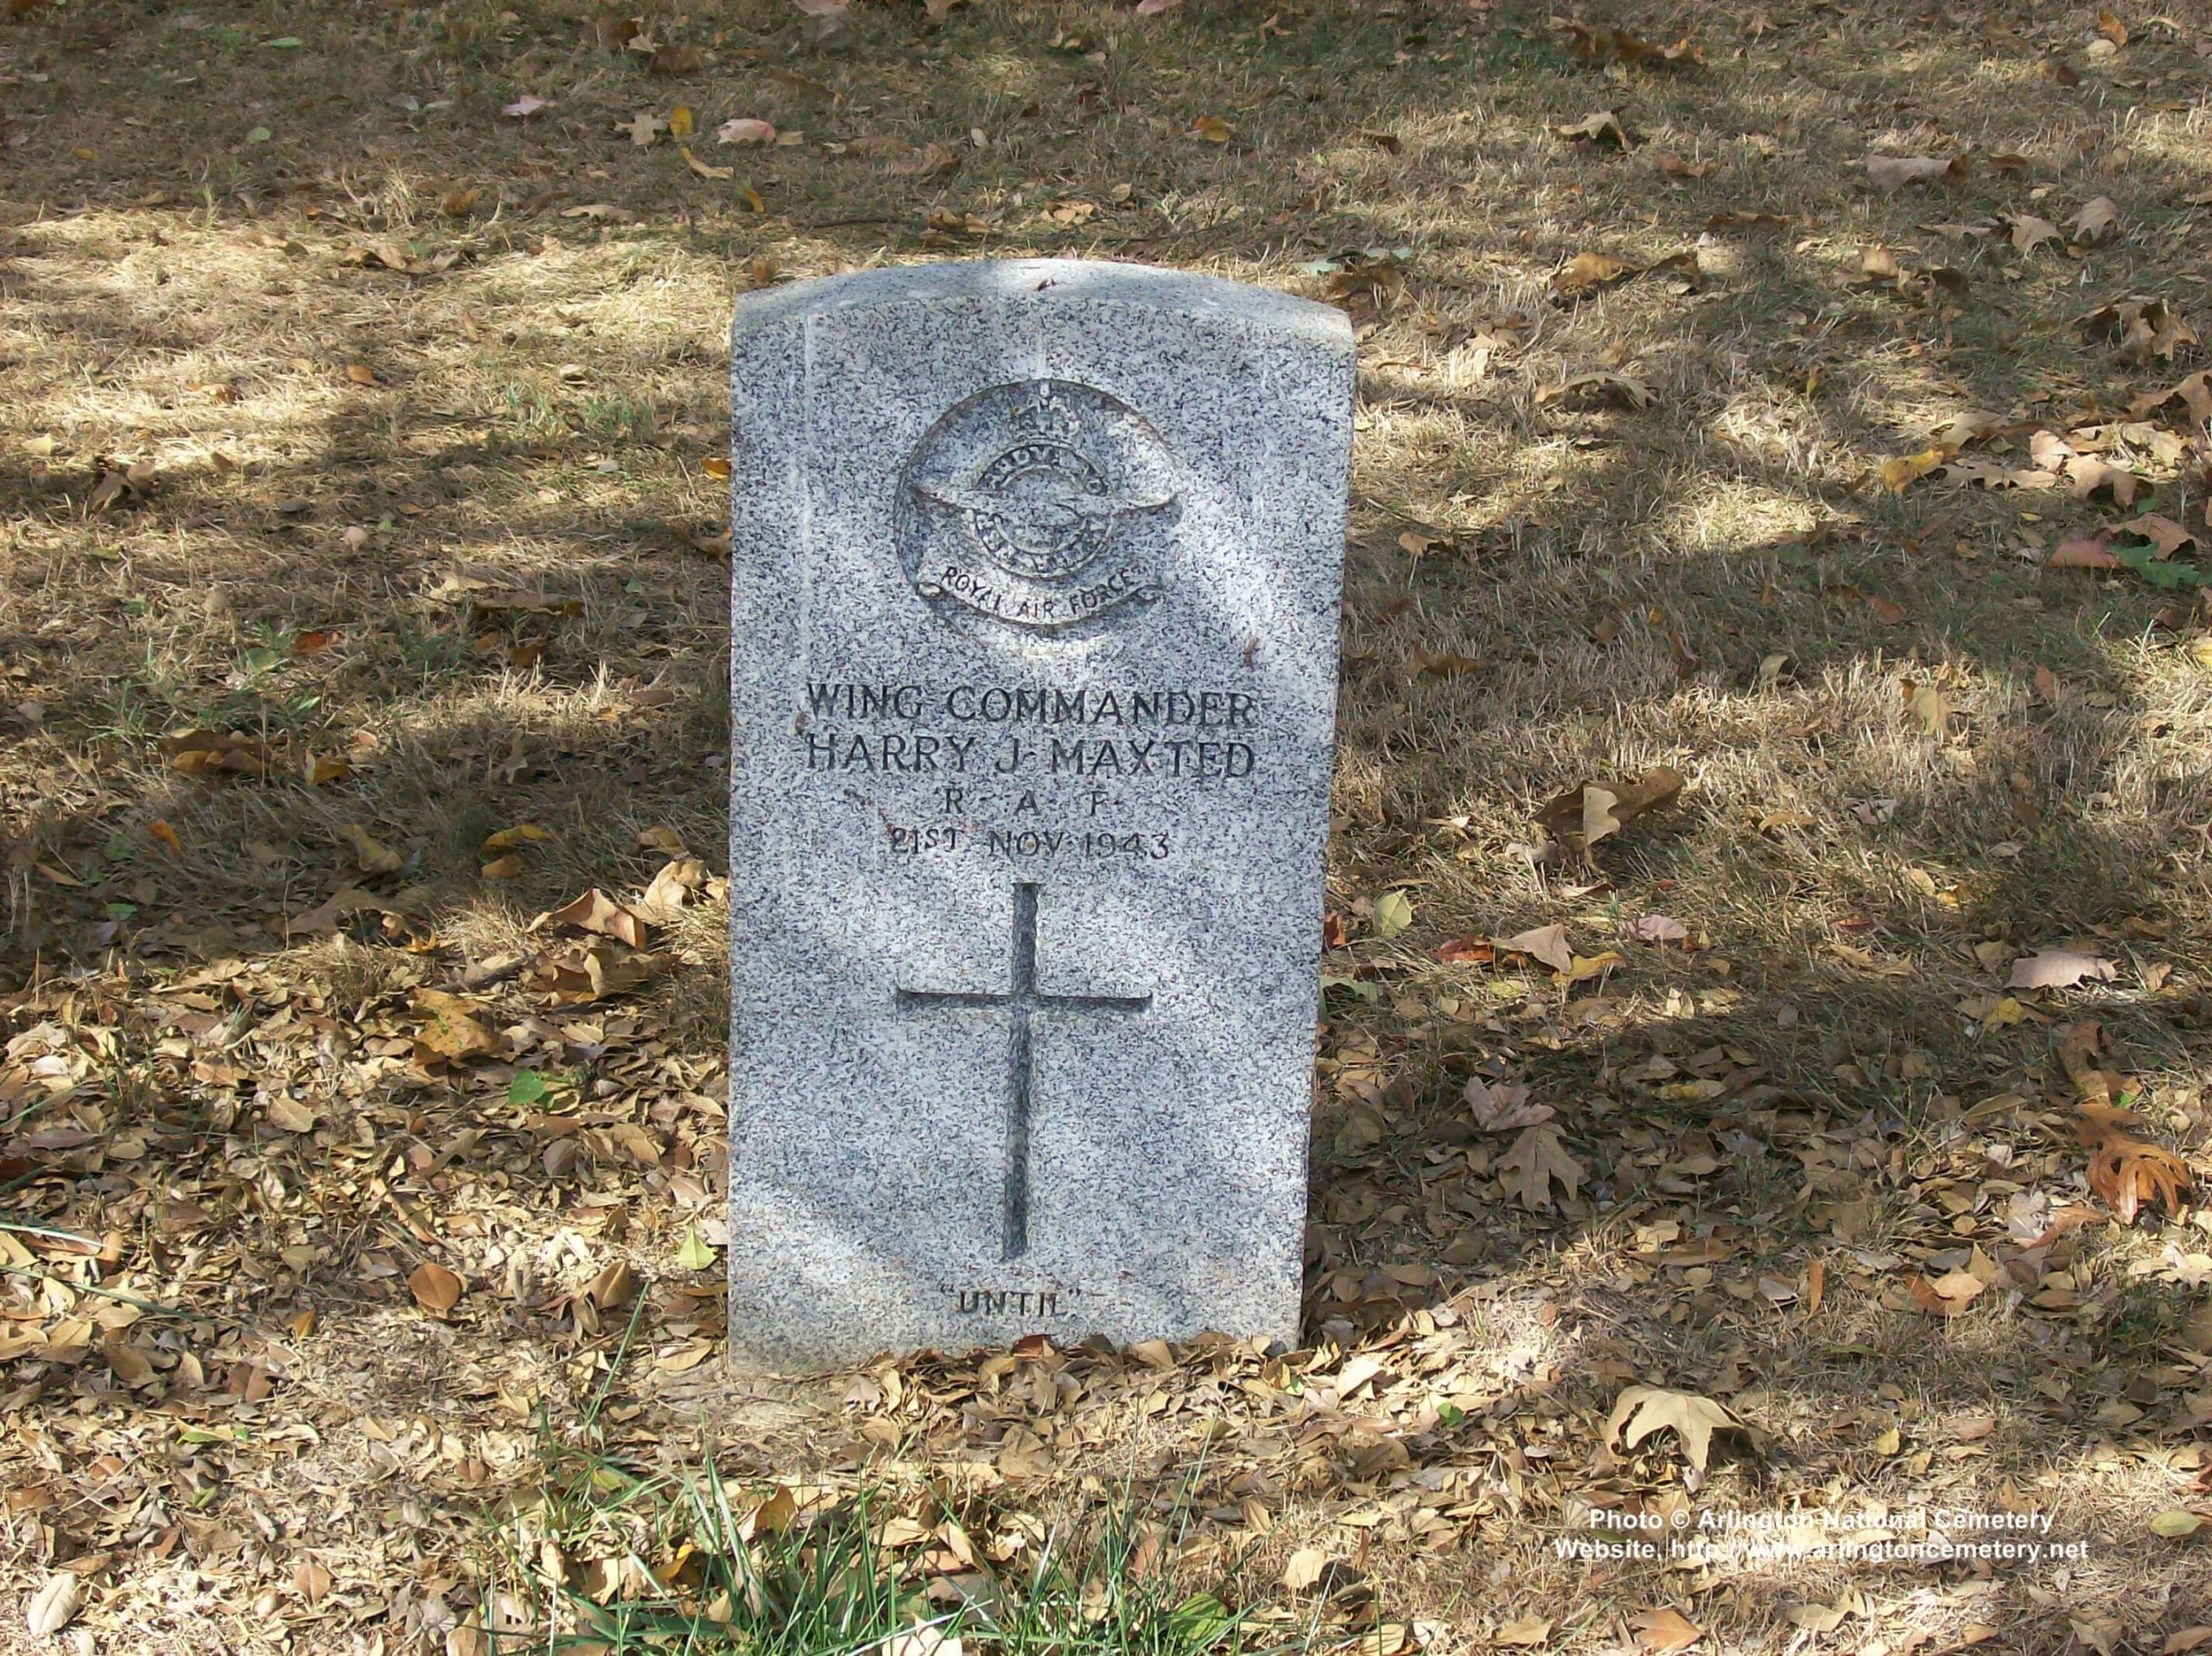 hjmaxted-gravesite-photo-october-2007-001